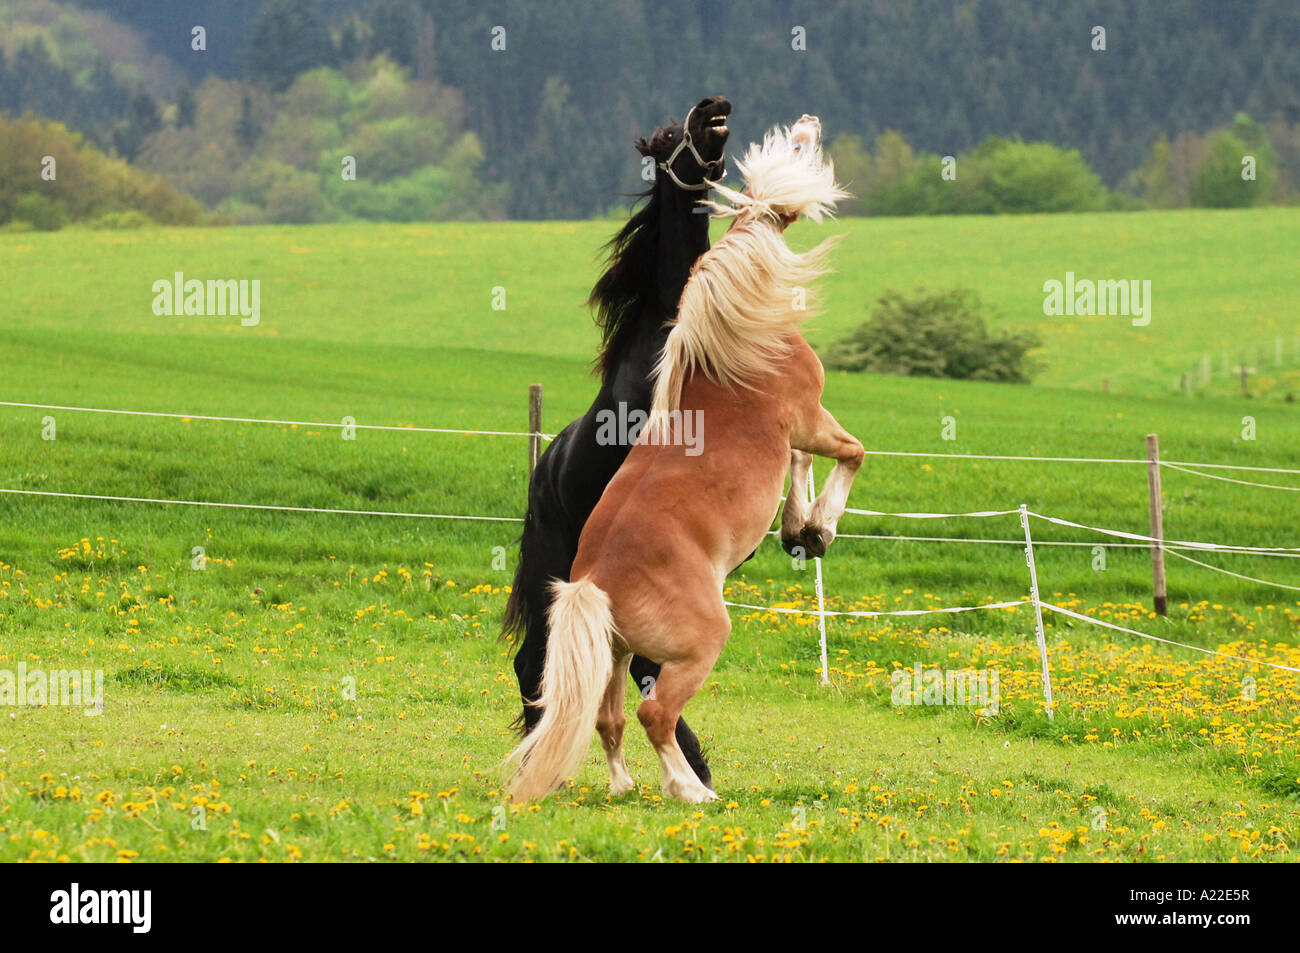 Friesian Horse and Haflinger Horse Stock Photo